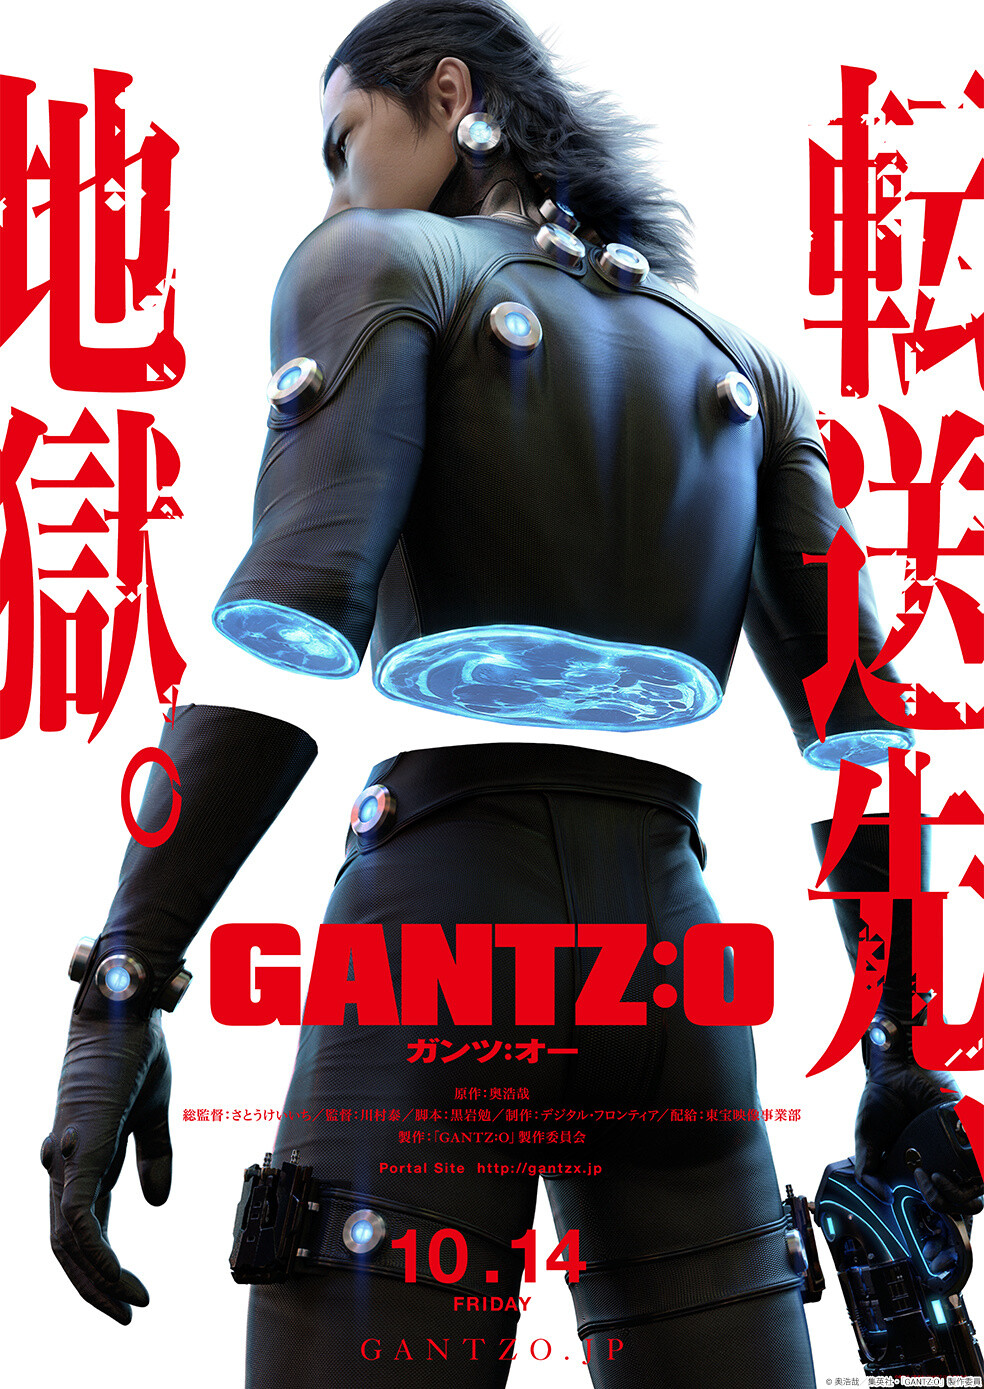 Sneak Preview For Gantz O Revealed And Main Cast Announced Movie News Tokyo Otaku Mode Tom Shop Figures Merch From Japan